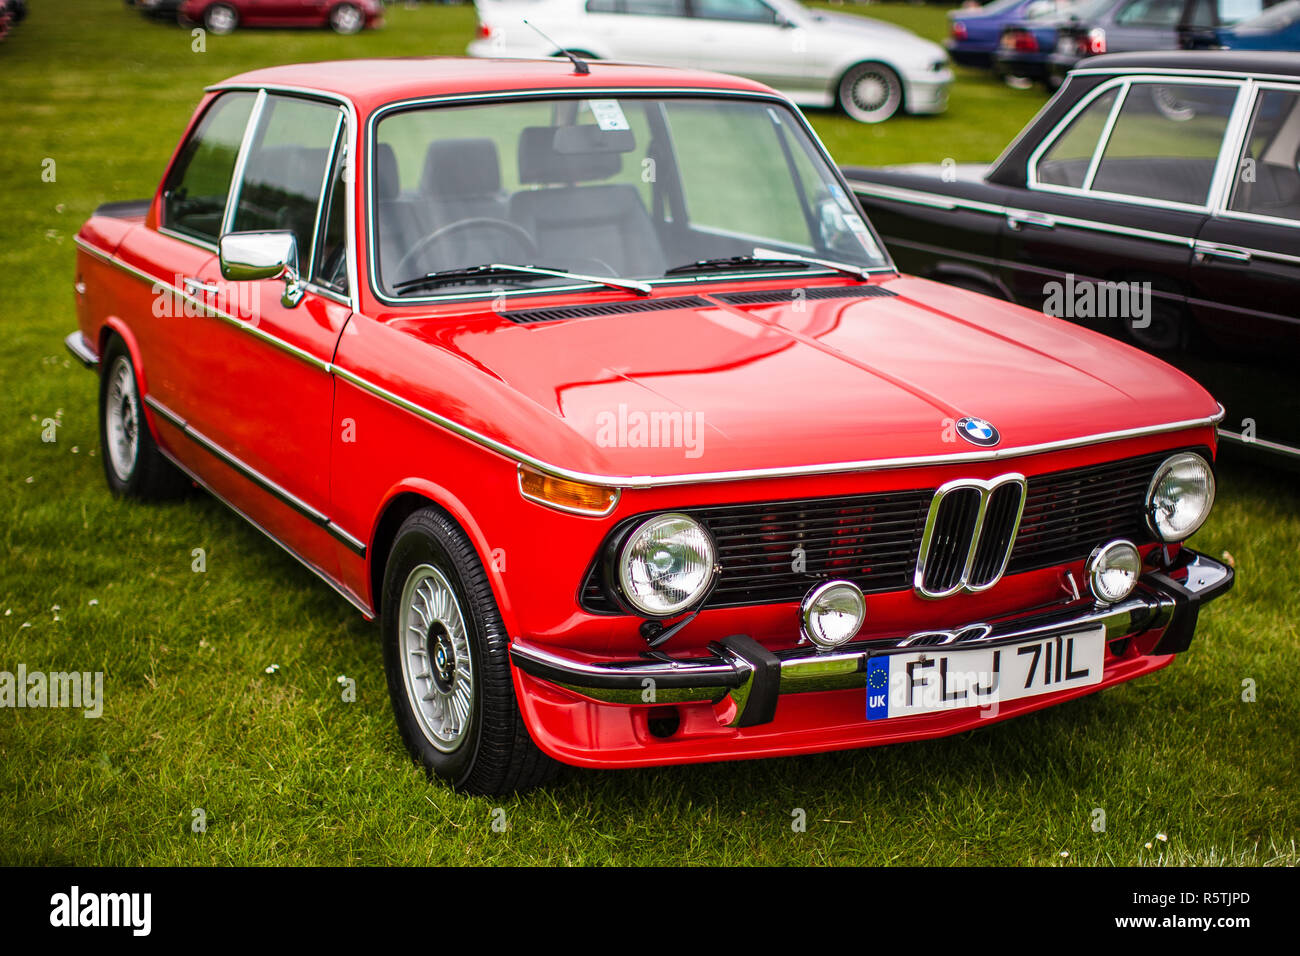 1972 BMW 2002 UK. Vintage BMW 2002 1972 Model Year. Stock Photo